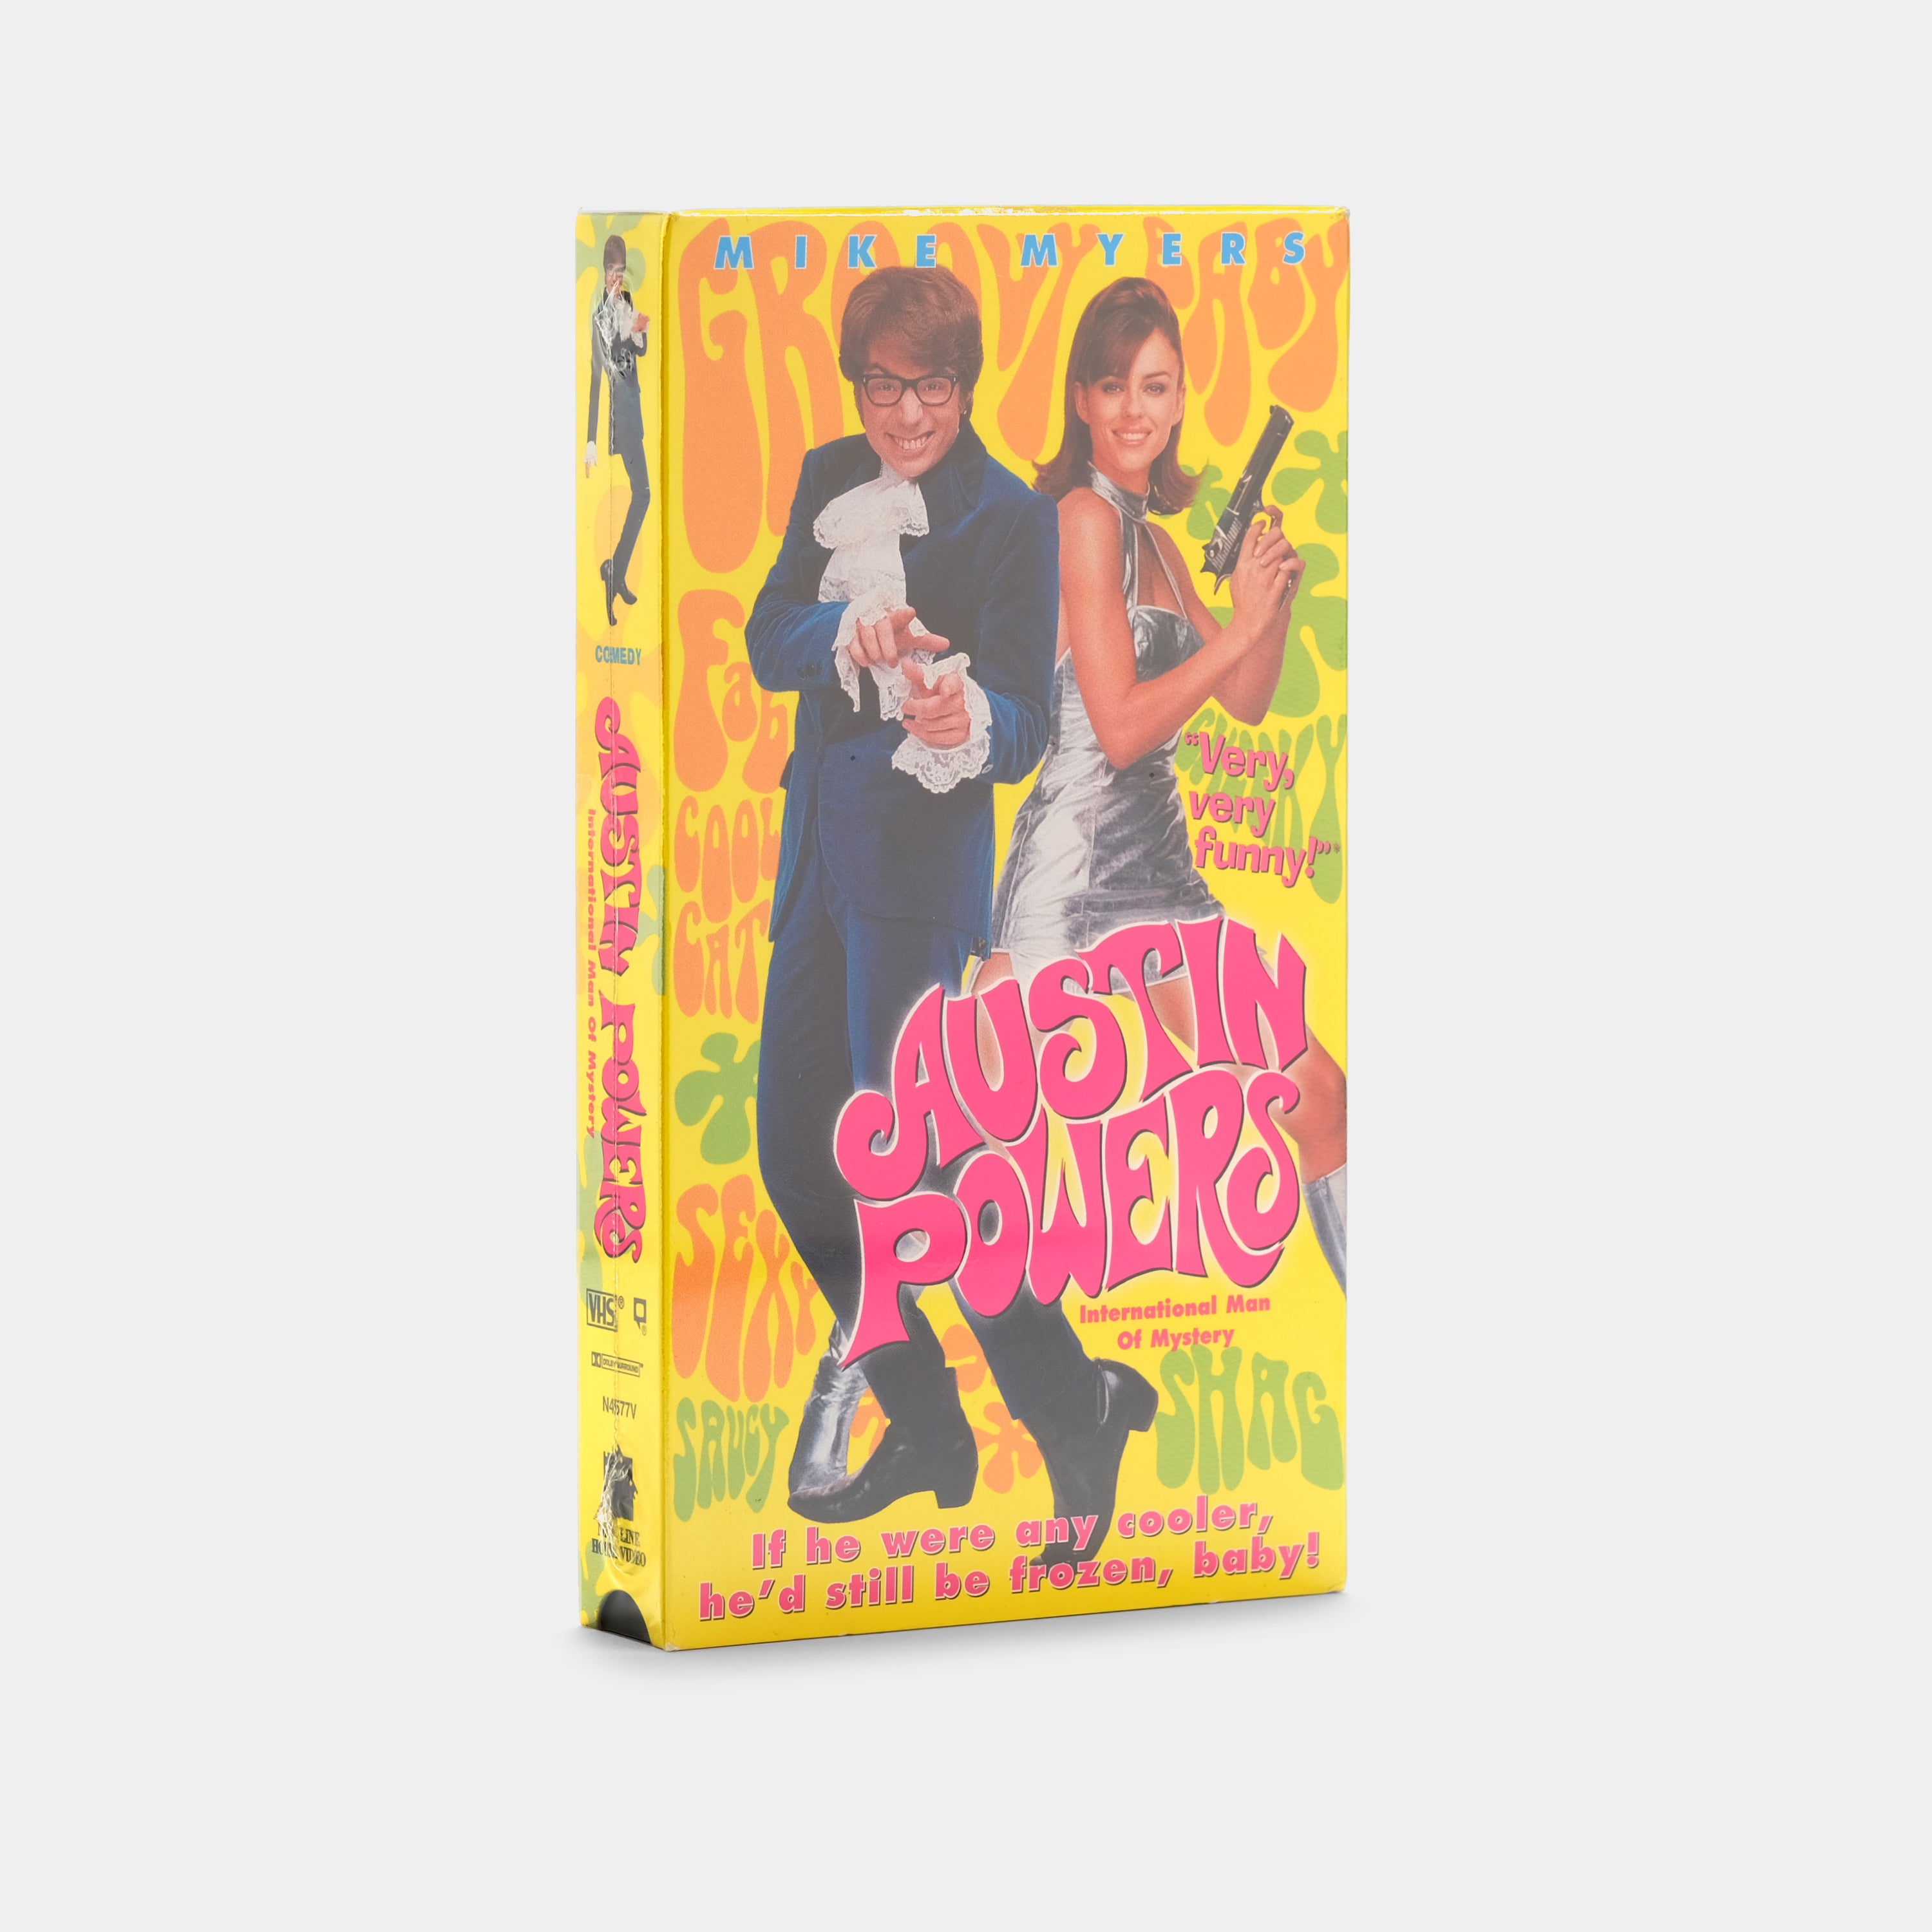 Austin Powers: International Man of Mystery (Sealed) VHS Tape